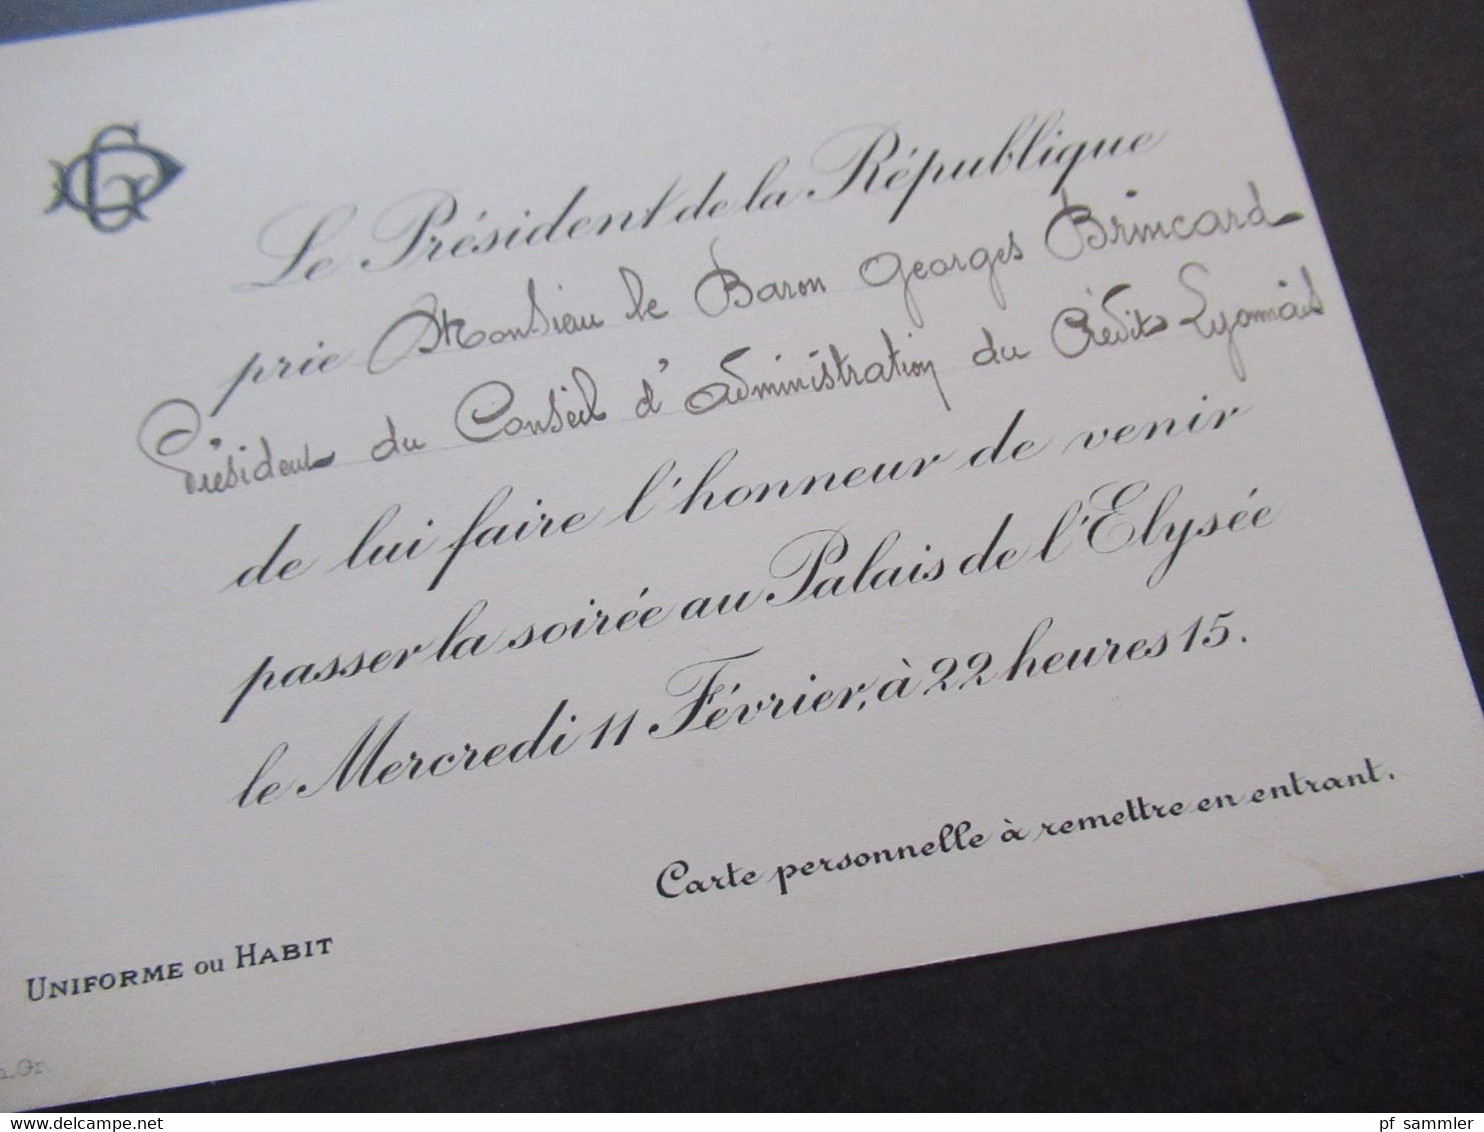 Frankreich 1920er Jahre 2x originale Einladungskarte von Gaston Doumergue Le President de la republique zur soirée